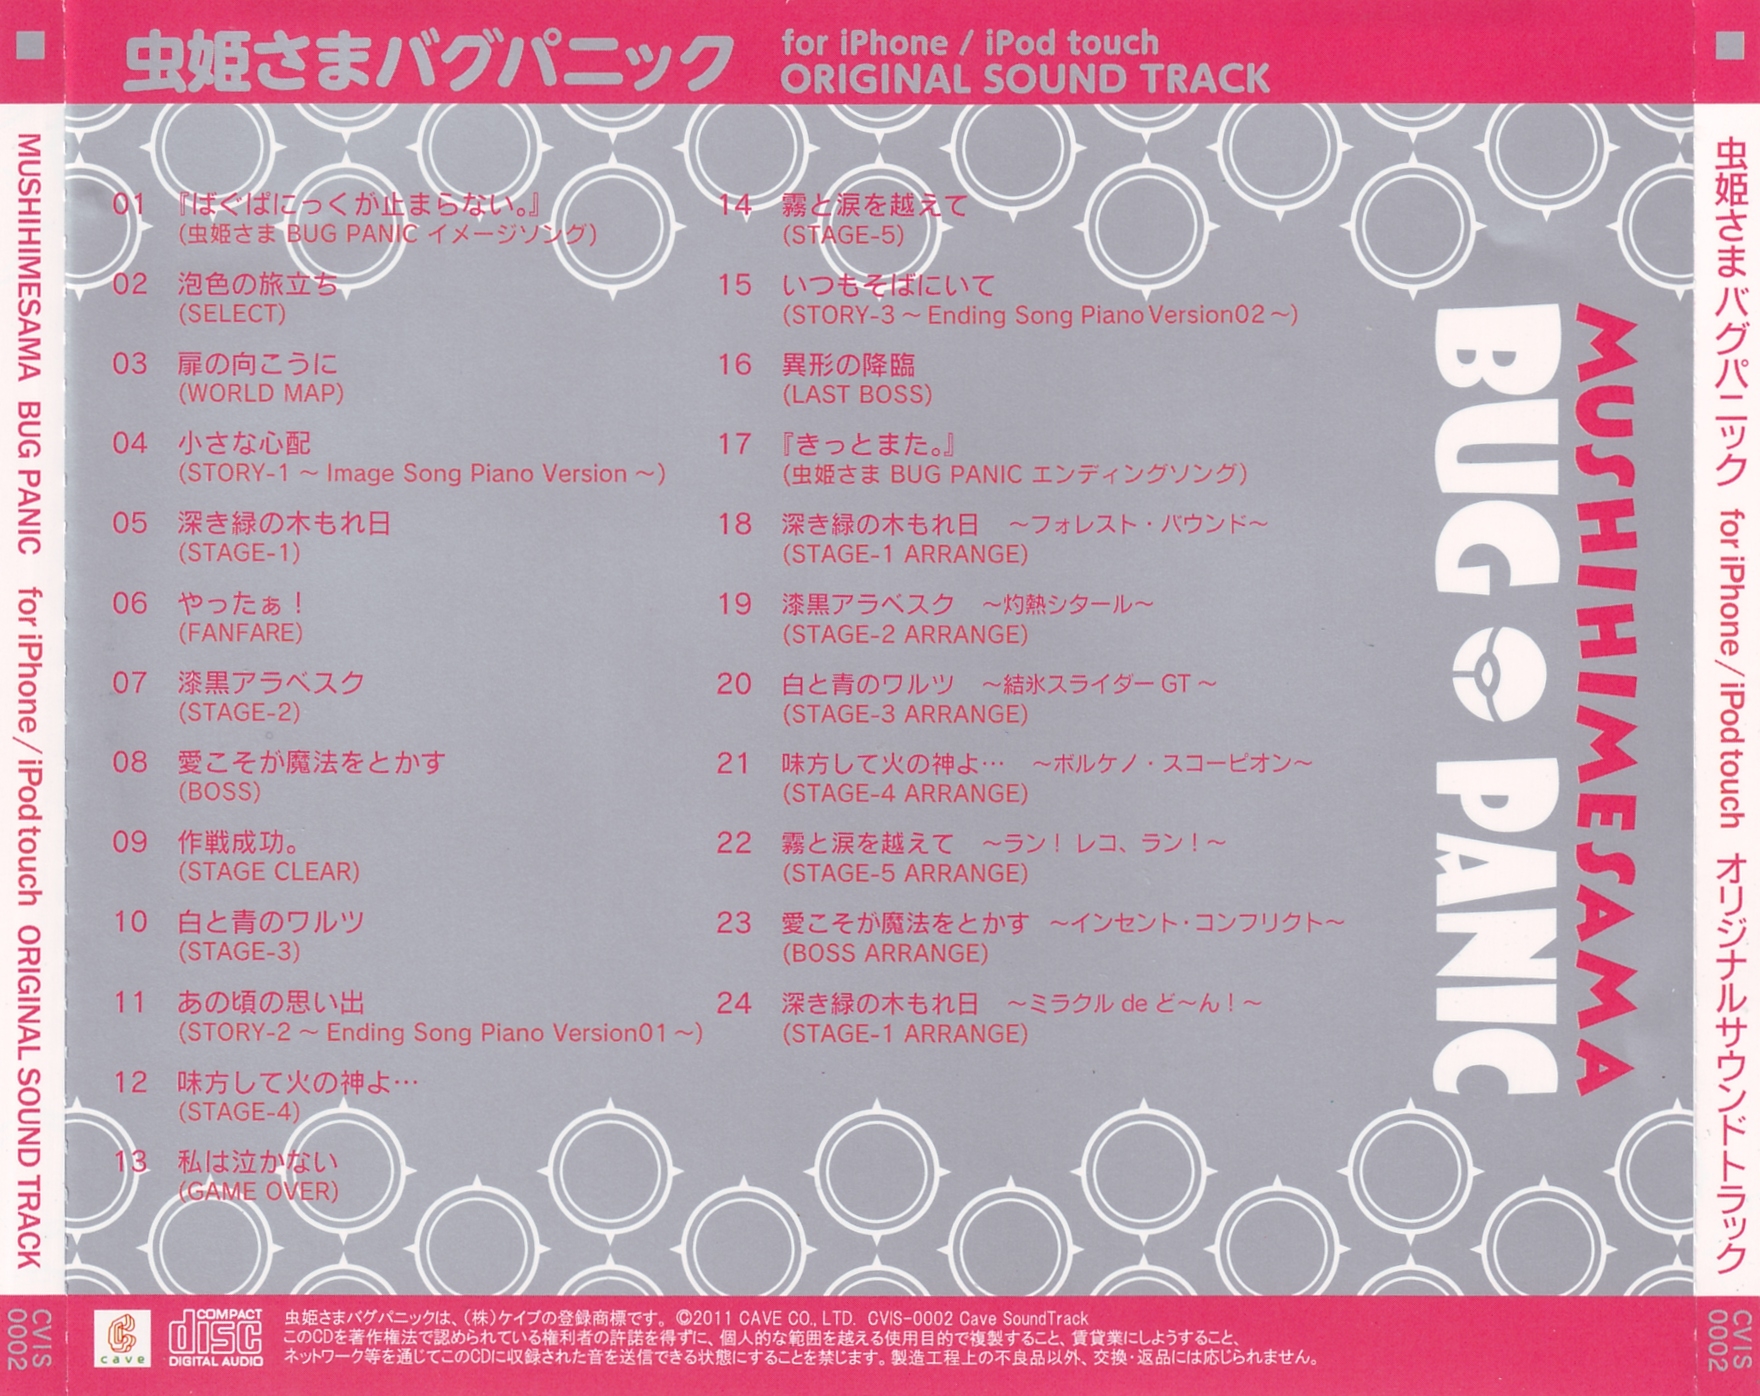 MUSHIHIMESAMA BUG PANIC for iPhone/iPod touch ORIGINAL SOUND TRACK (2011)  MP3 - Download MUSHIHIMESAMA BUG PANIC for iPhone/iPod touch ORIGINAL SOUND  TRACK (2011) Soundtracks for FREE!